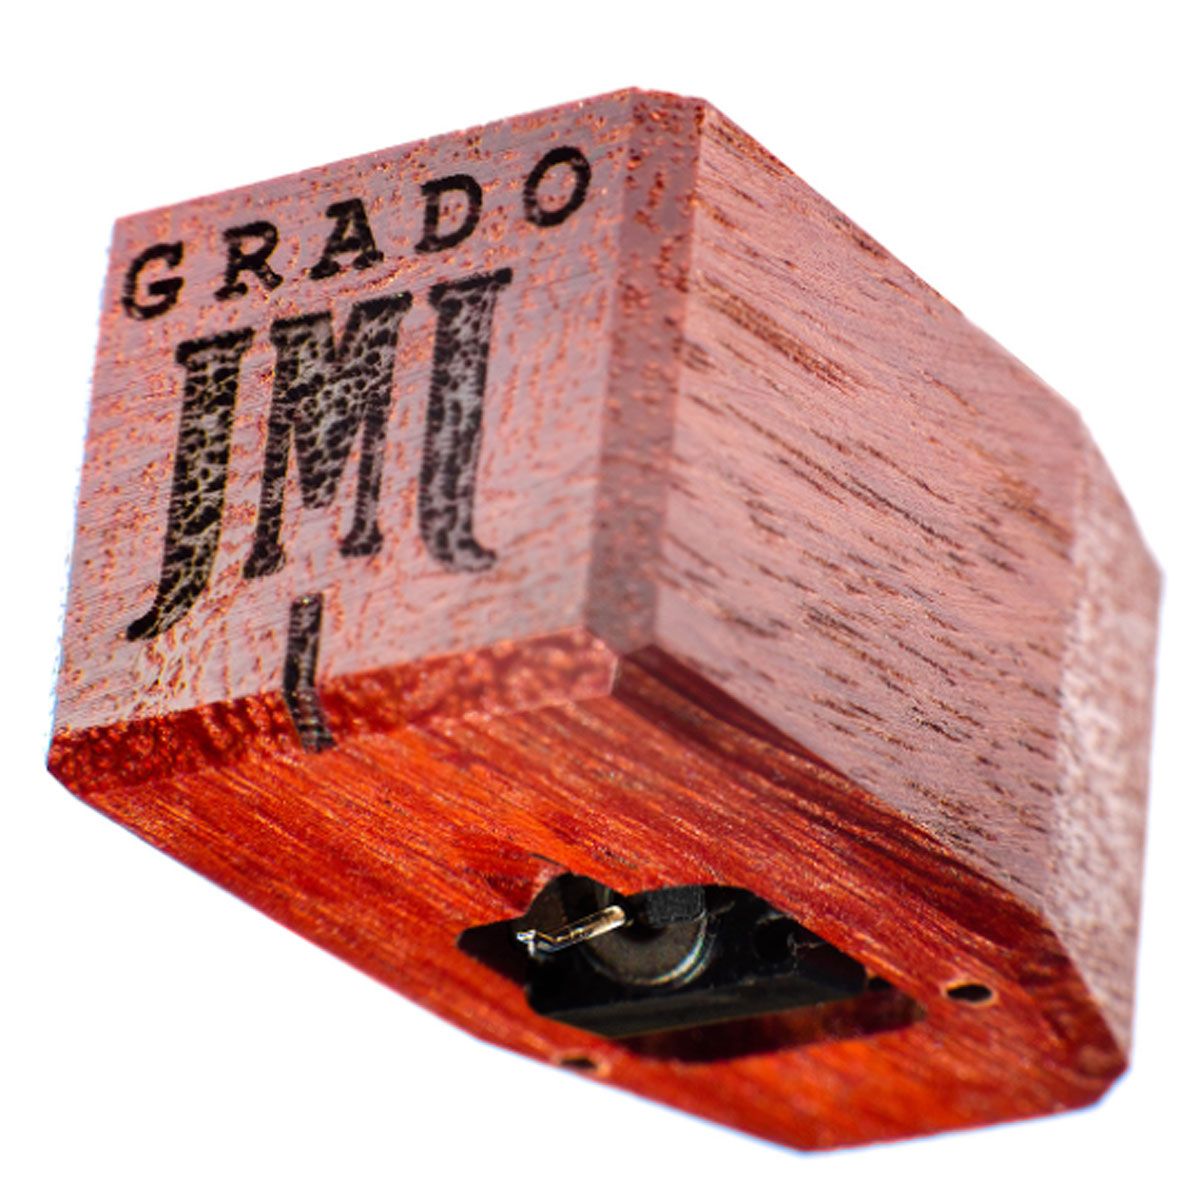 Grado Master3 Phono Cartridge - High Output, front view